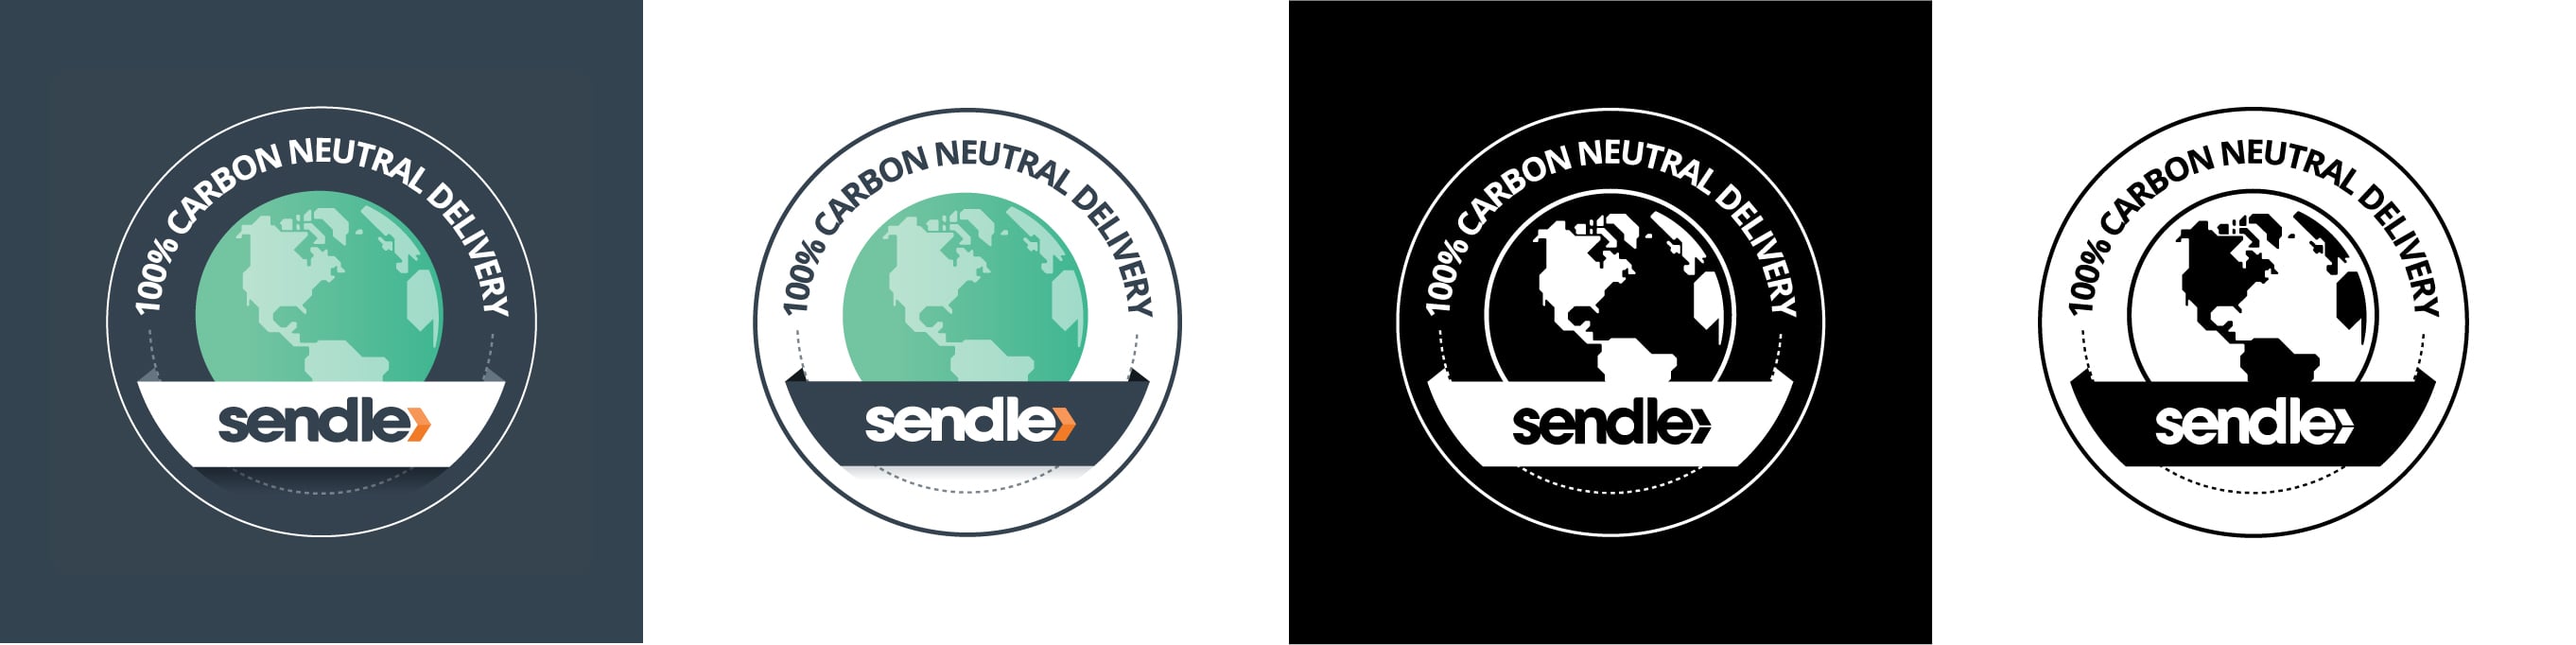 sendle-carbon-neutral-logos-all-US_2x.jpg